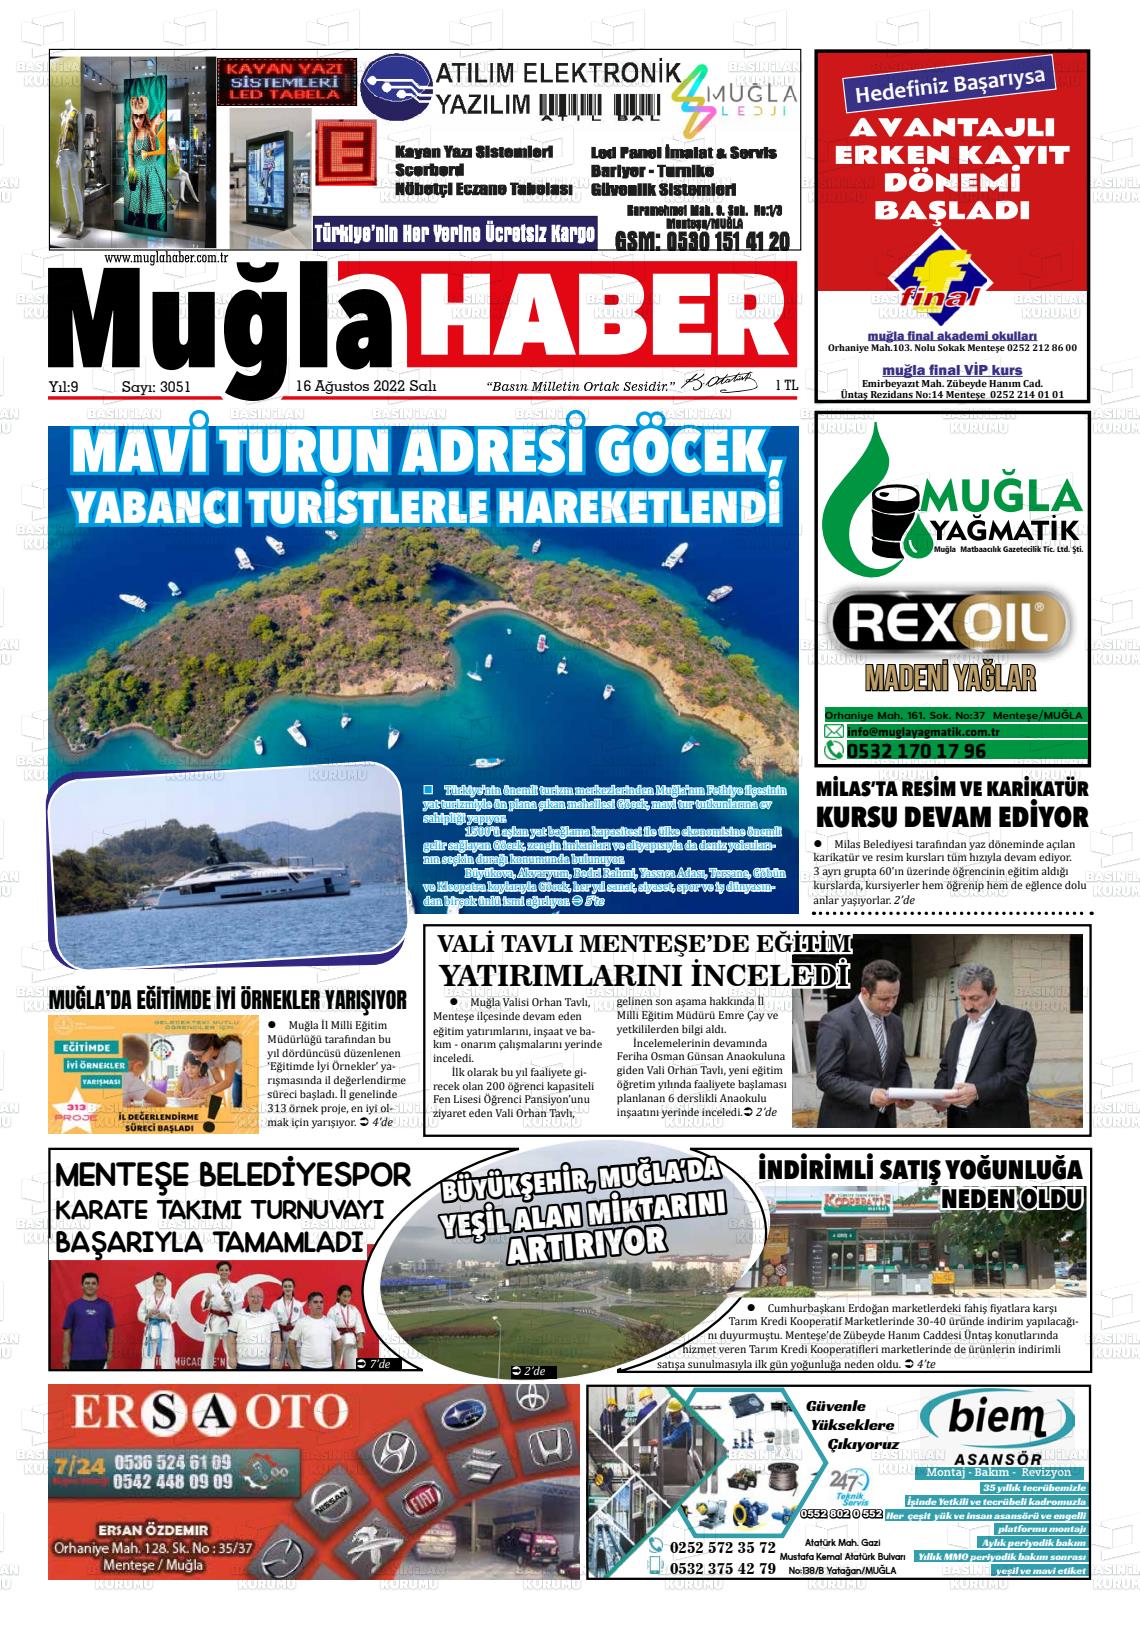 16 Ağustos 2022 Muğla Haber Gazete Manşeti